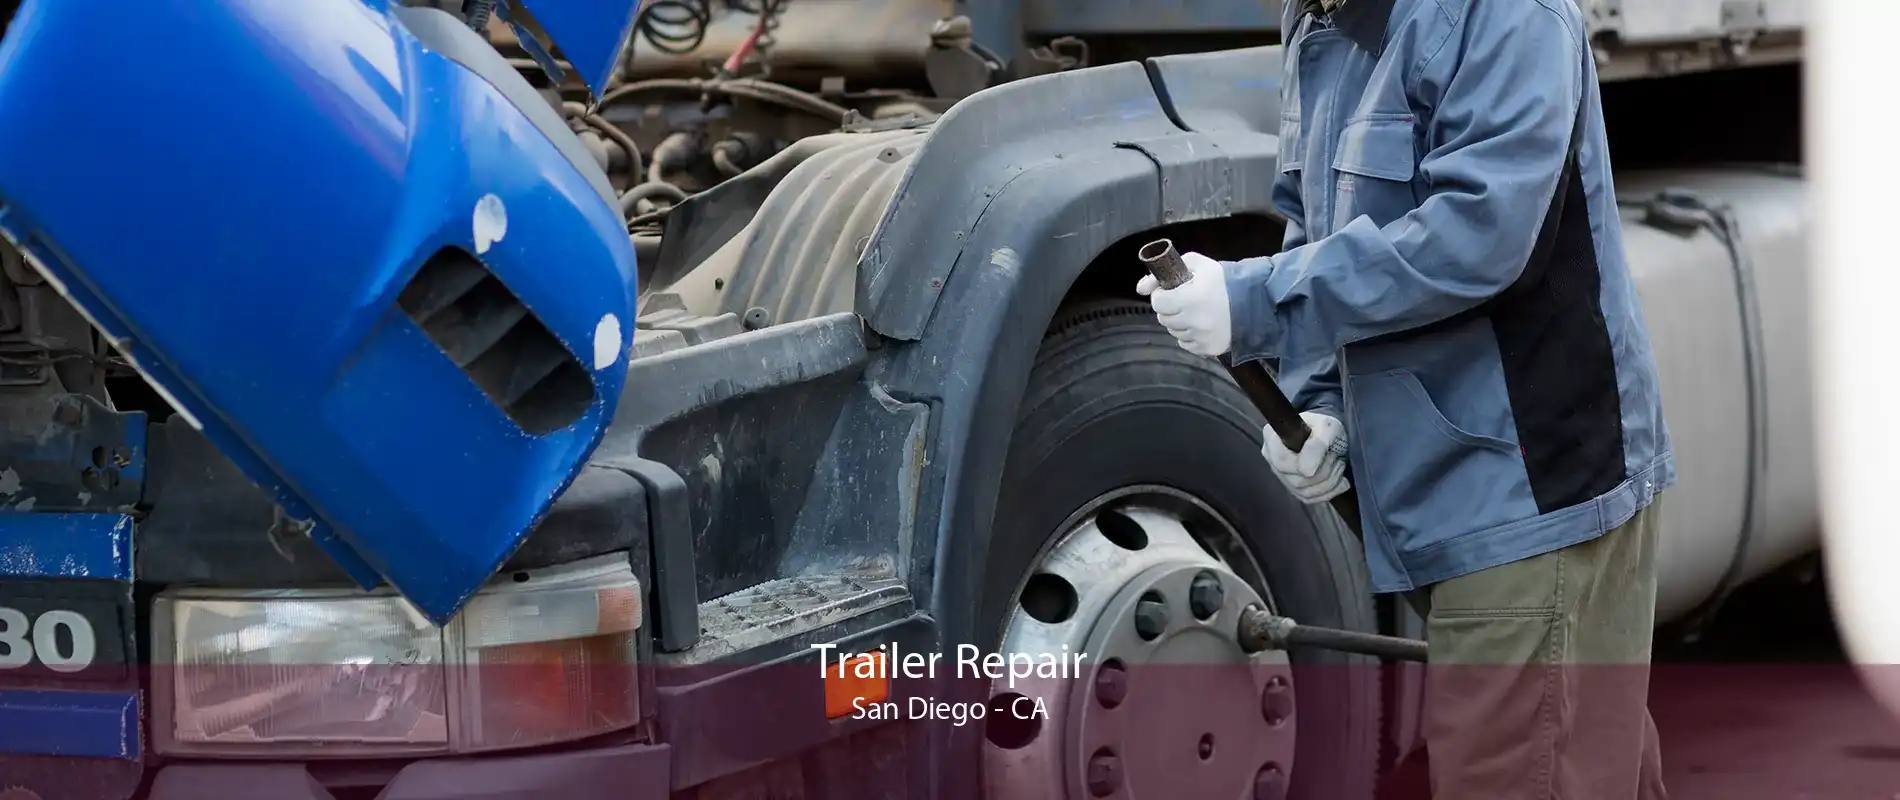 Trailer Repair San Diego - CA